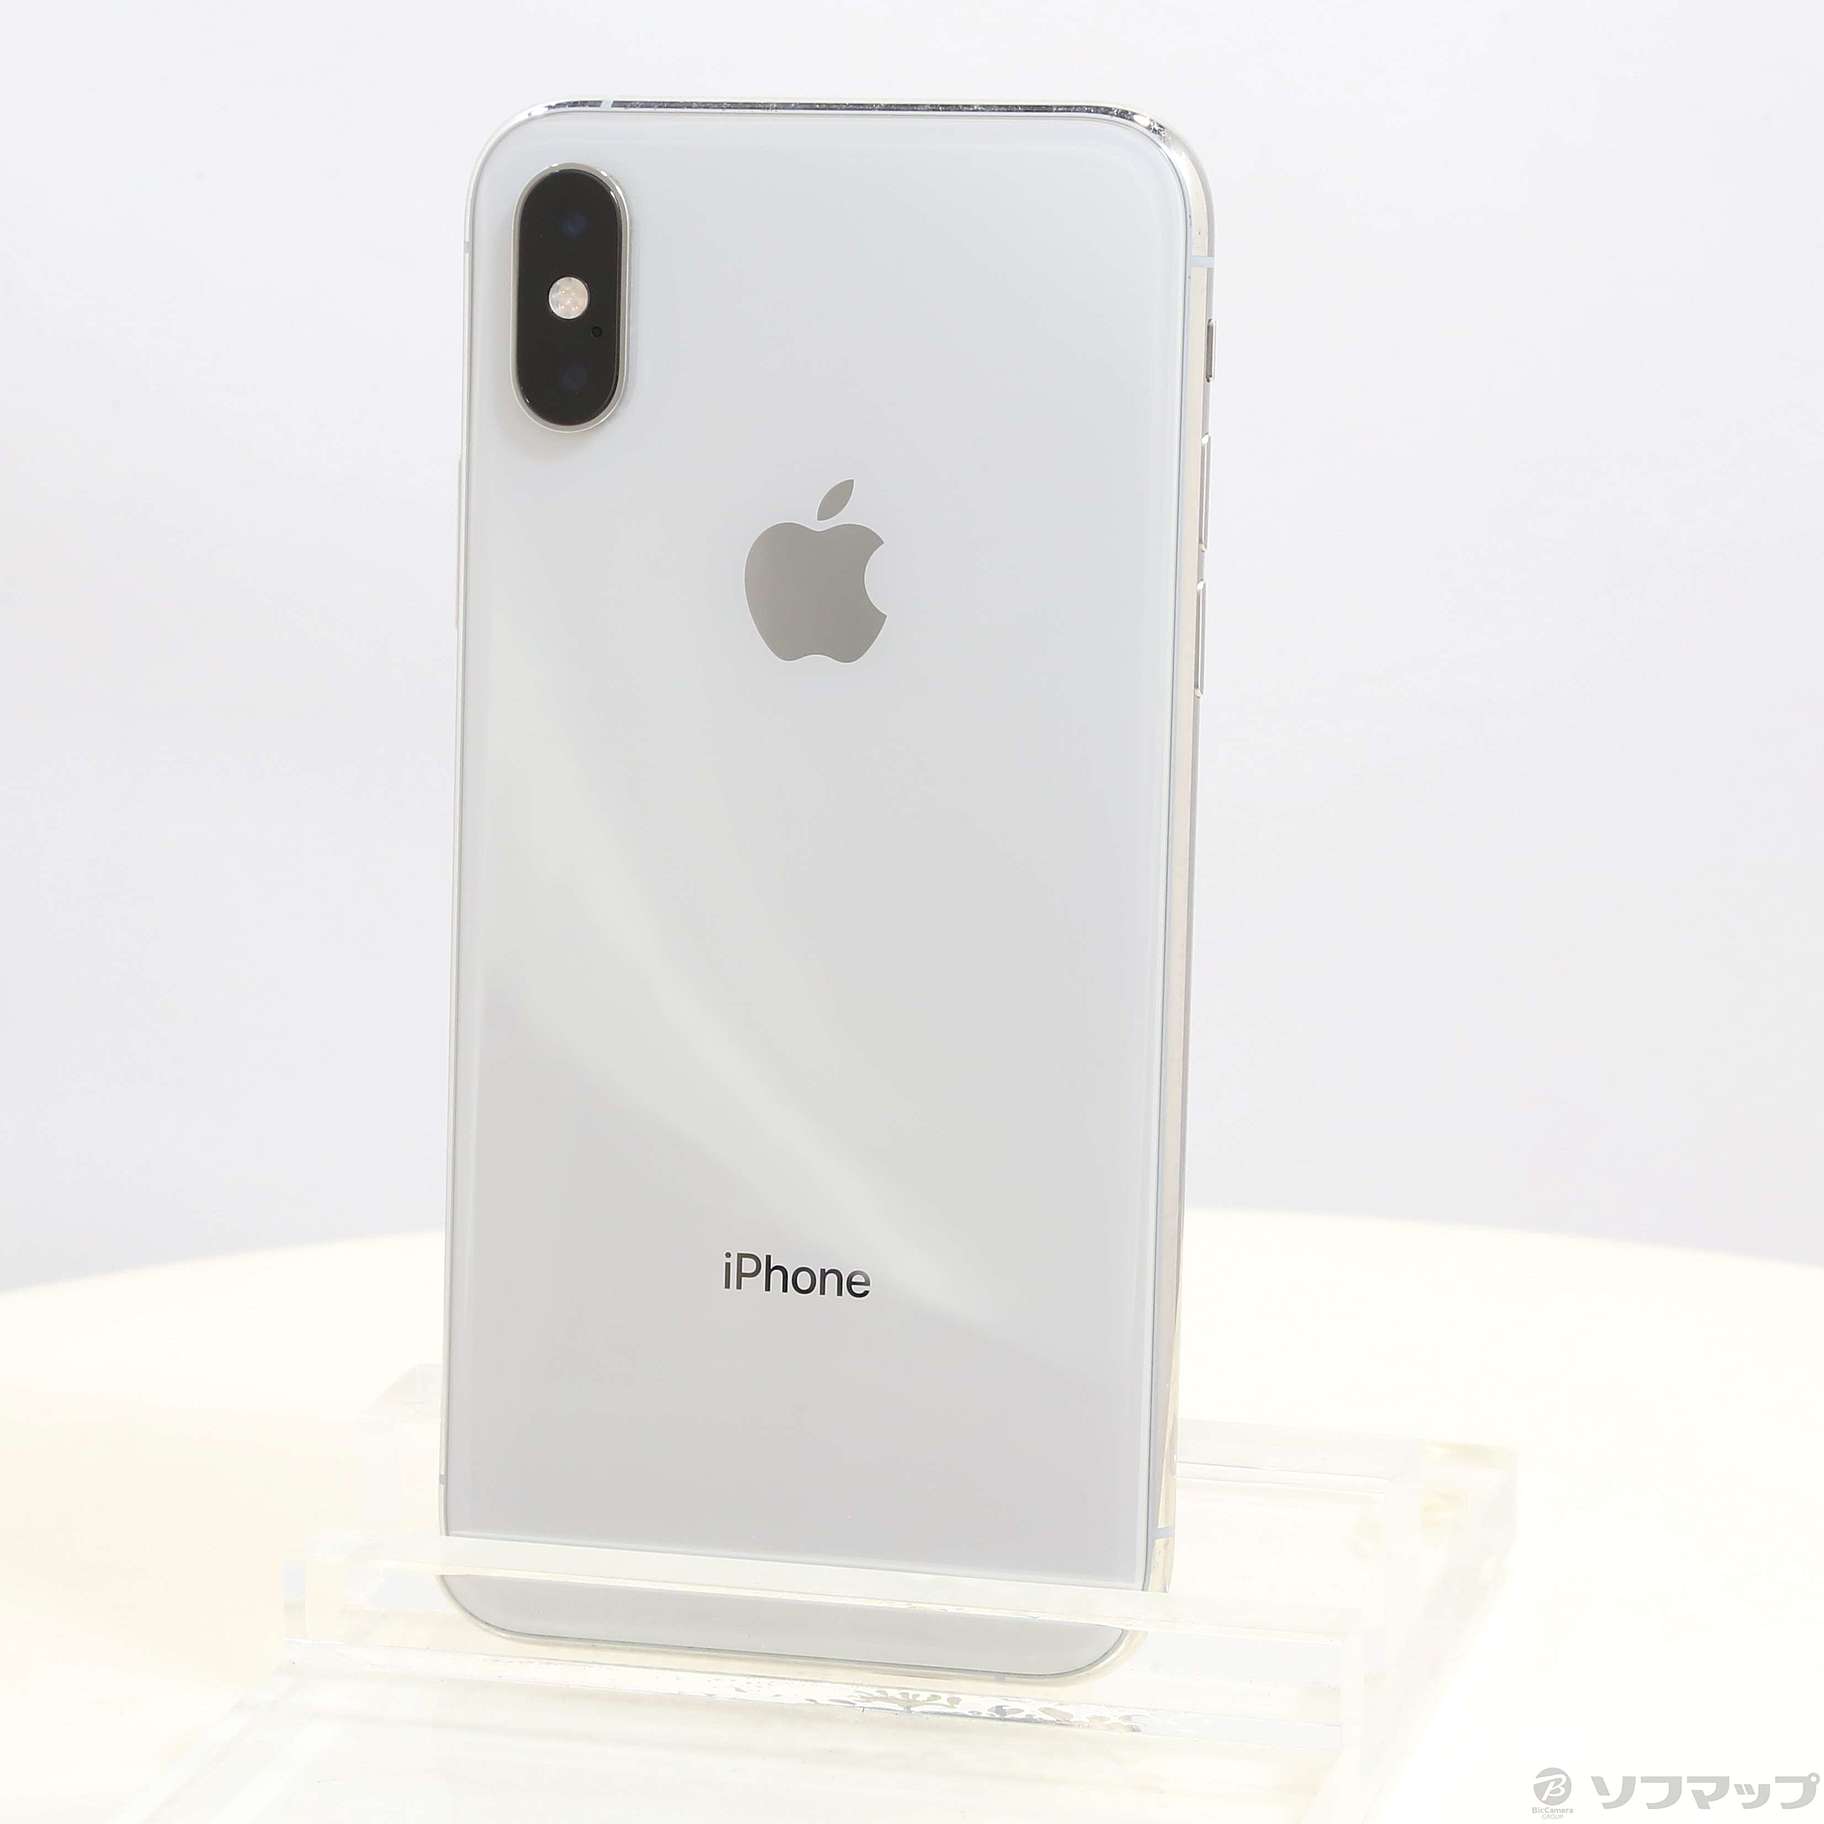 【AppleCare+】iPhone XS 256GB シルバー 新品